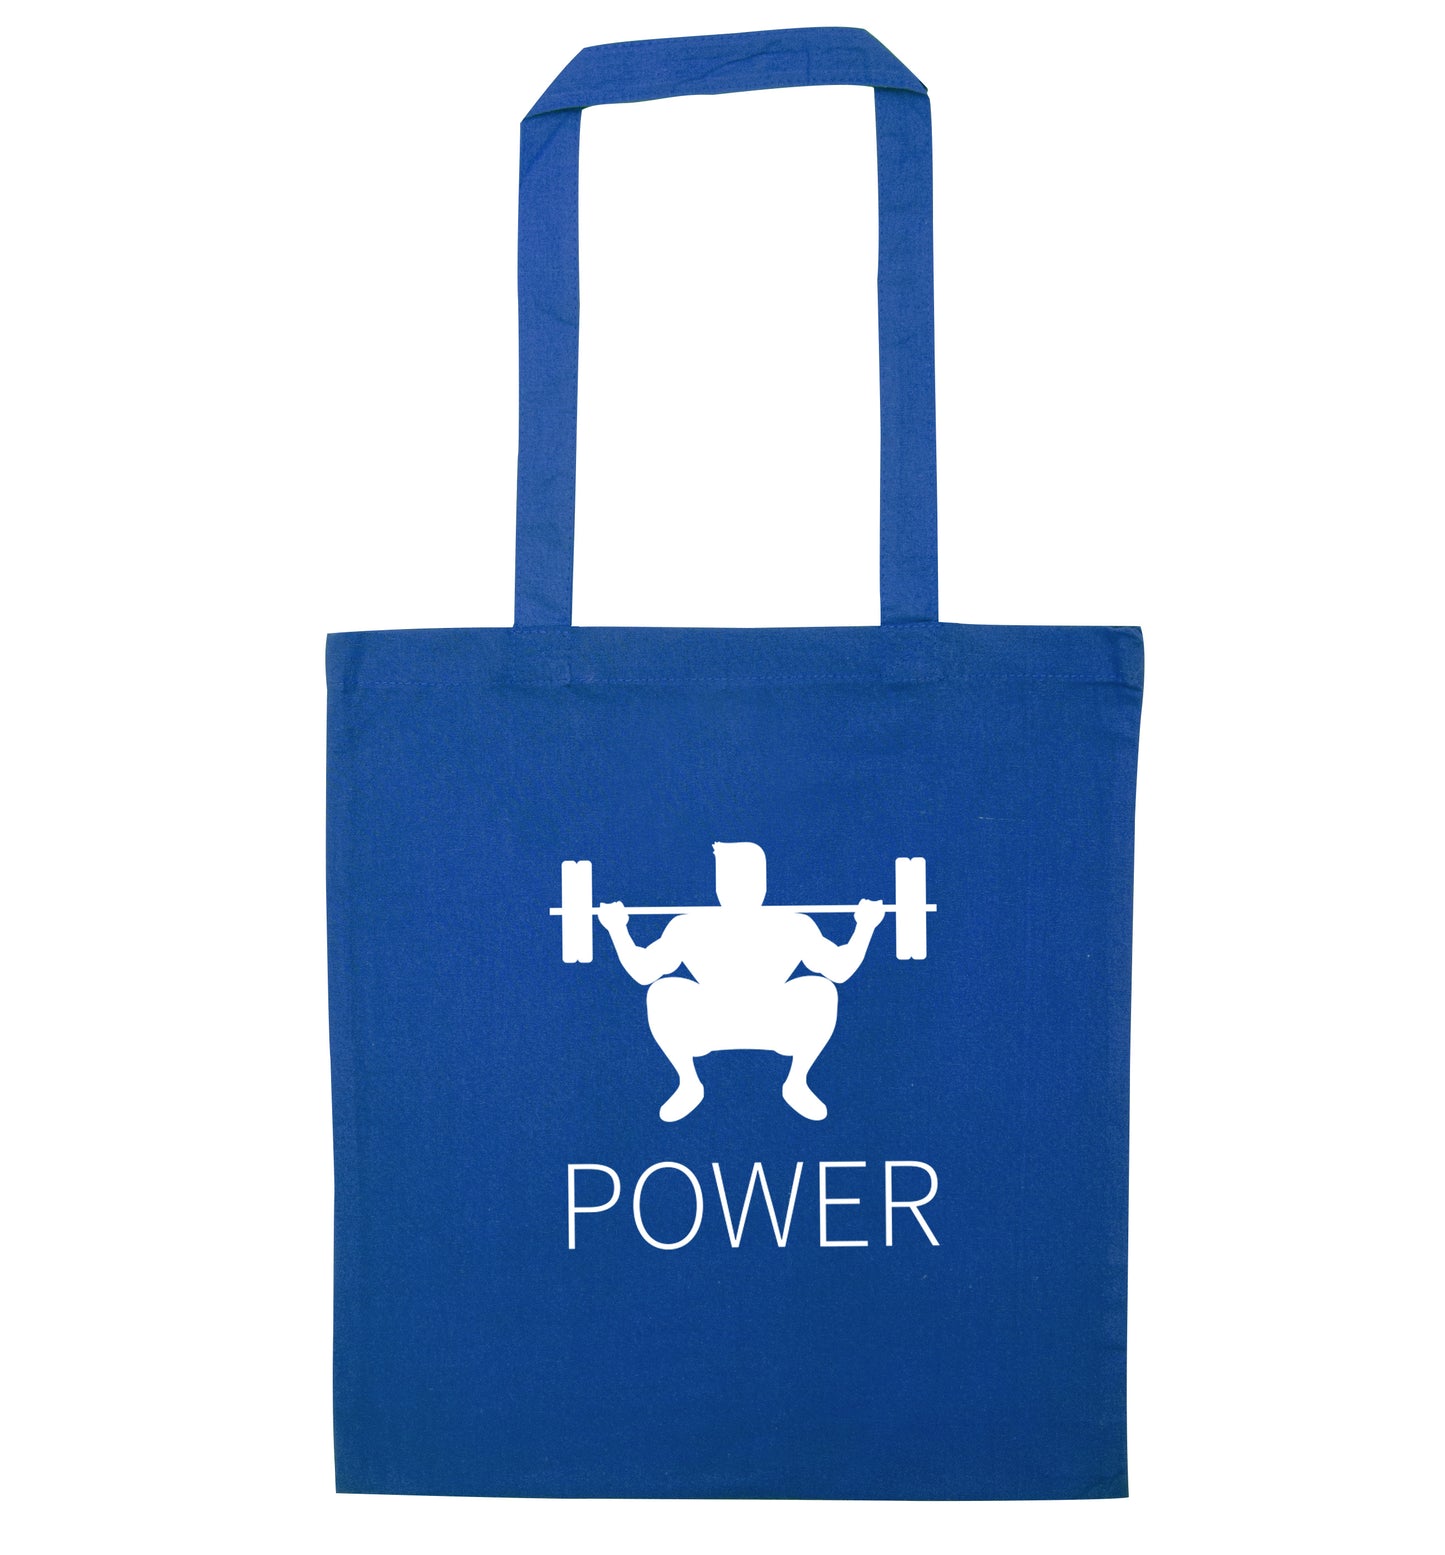 Lift power blue tote bag